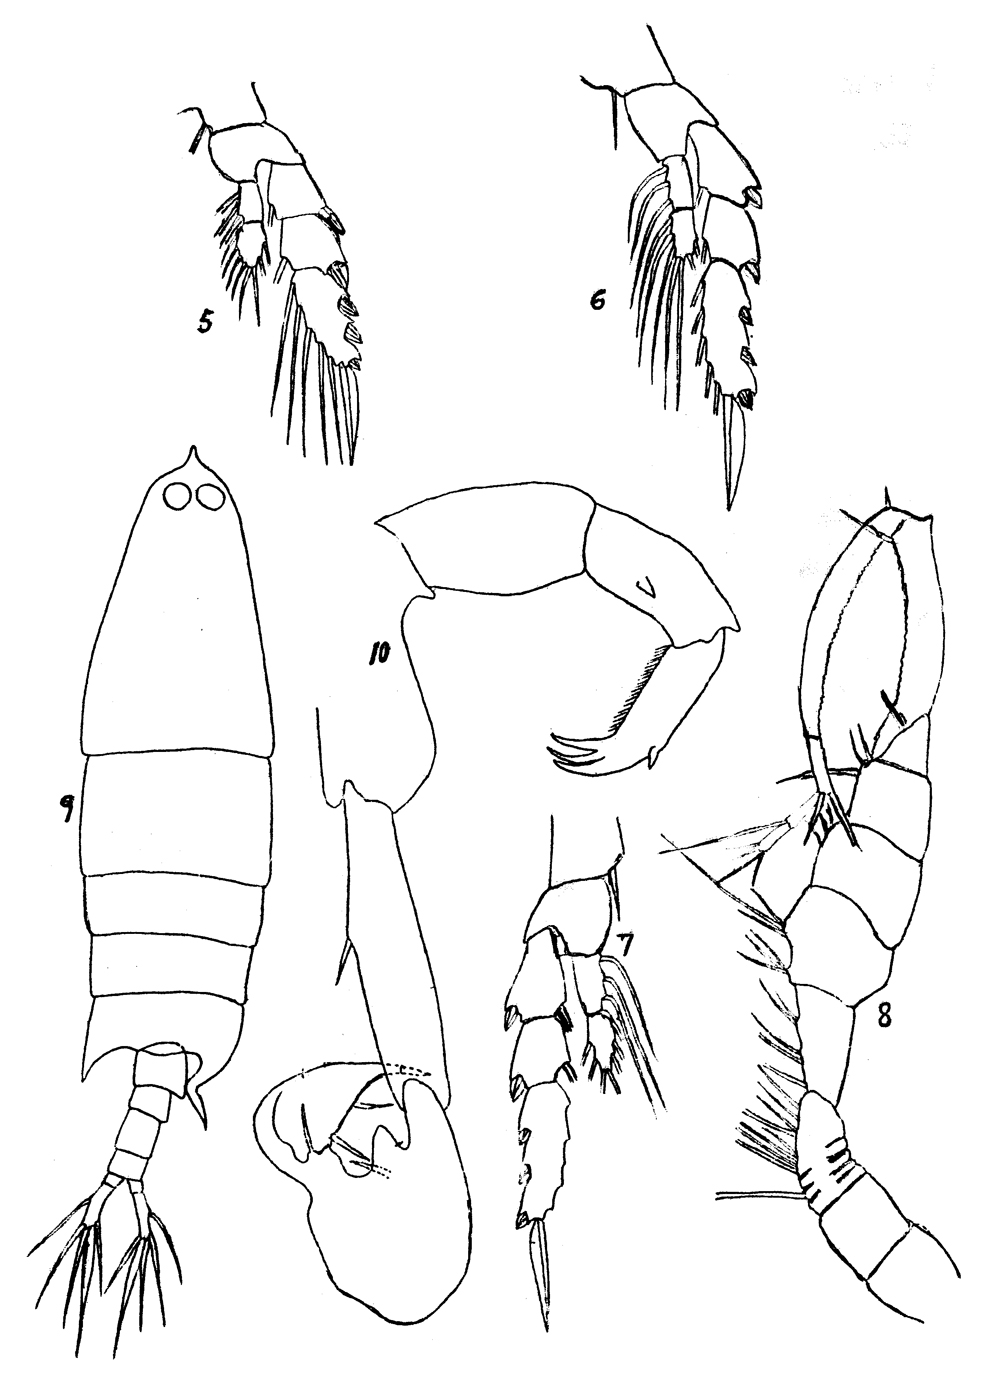 Espce Labidocera acuta - Planche 13 de figures morphologiques